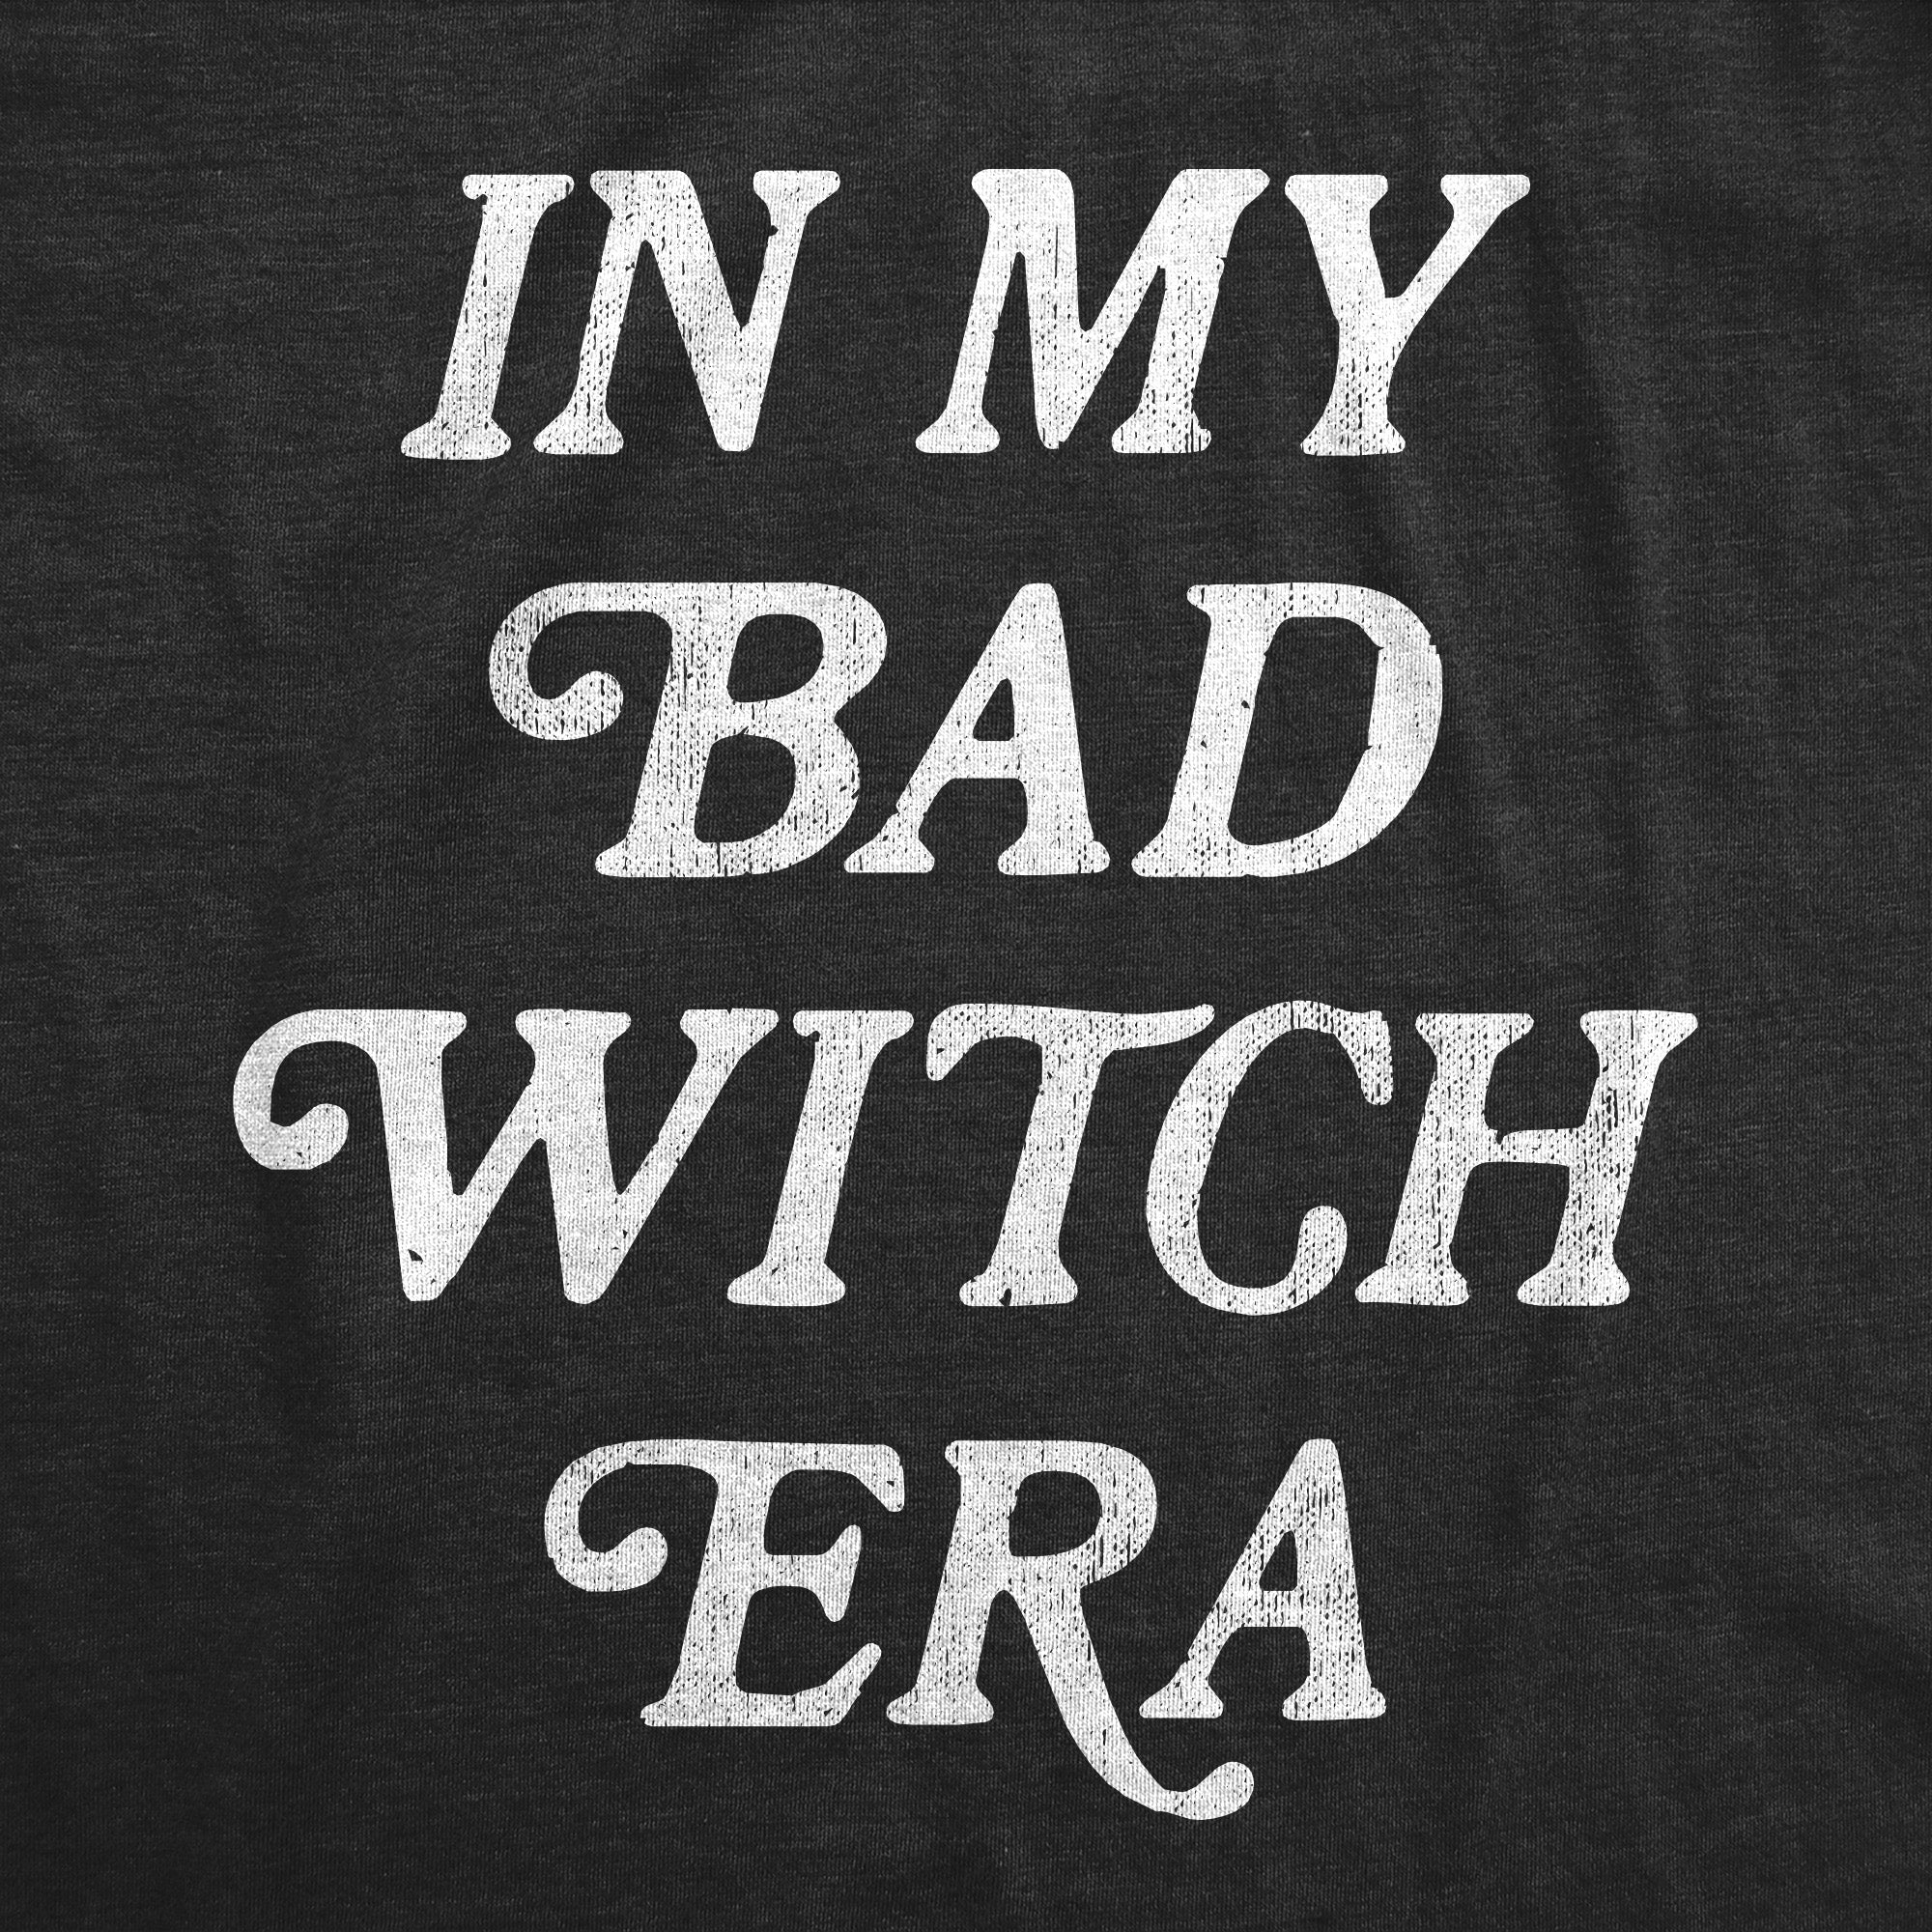 Funny Black - WITCH In My Bad Witch Era Sweatshirt Nerdy Halloween Tee